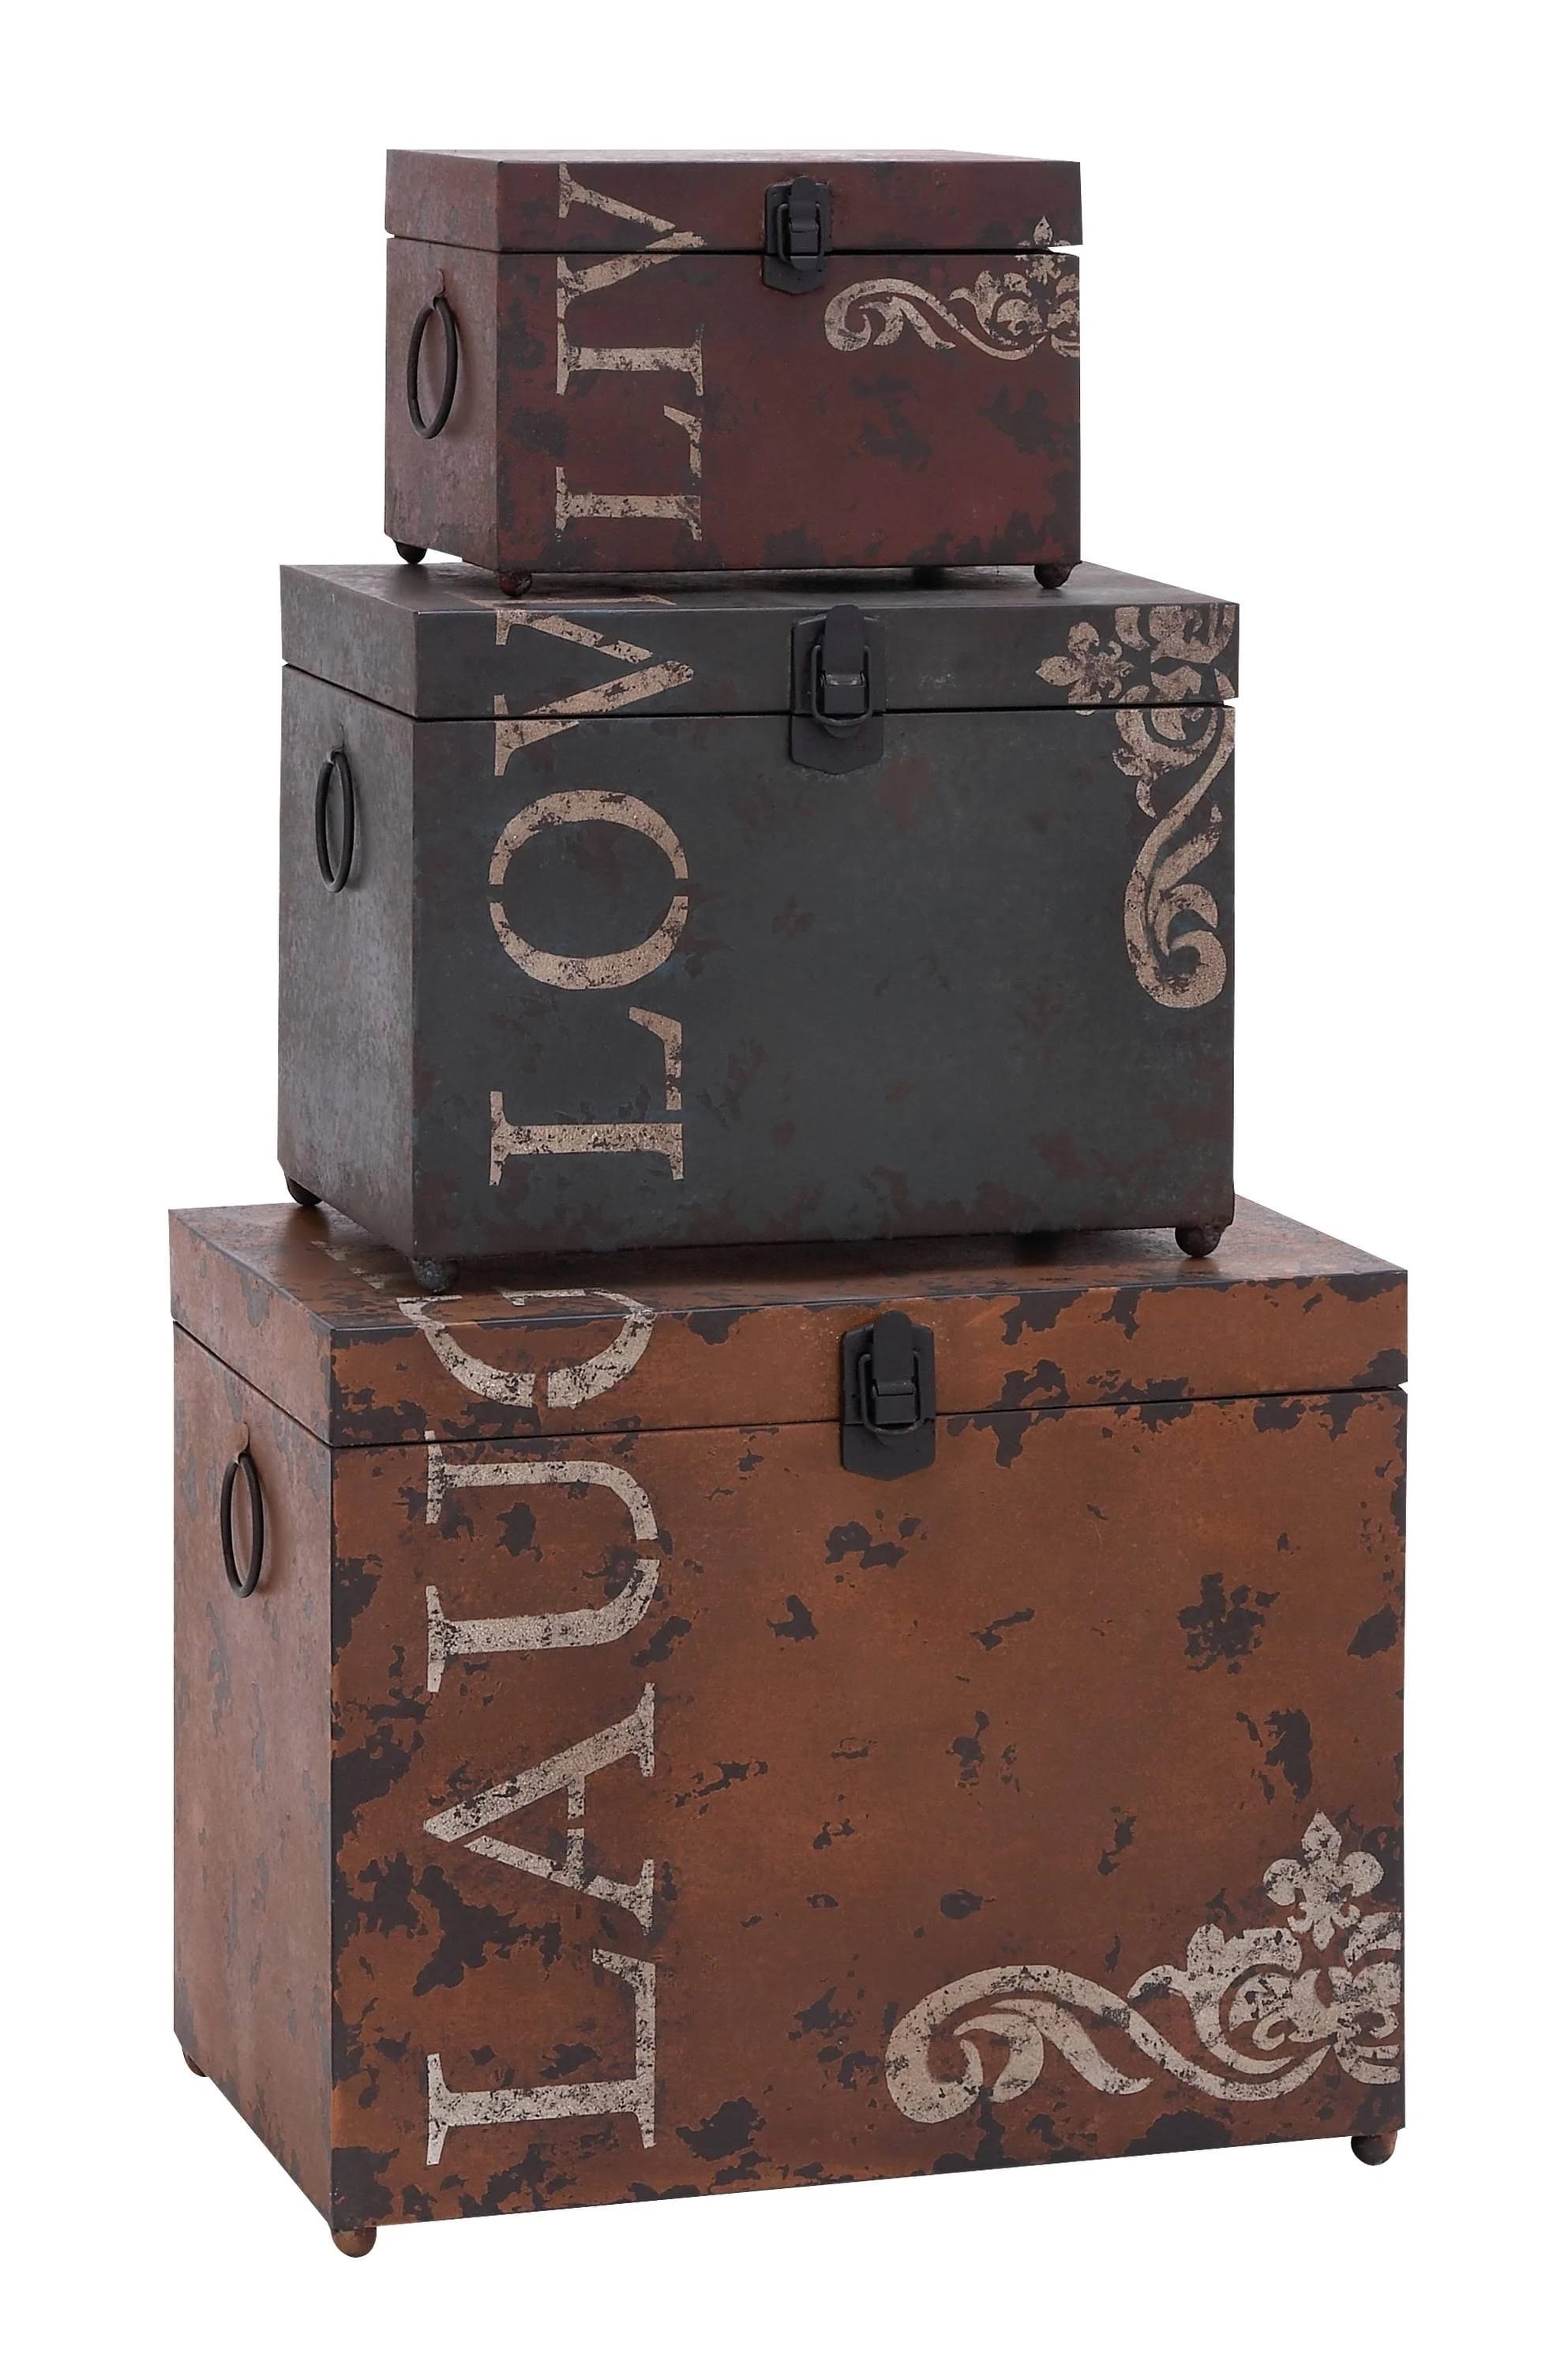 Live Love Laugh Iron Storage Trunk Decorative Boxes Set of 3 | Image